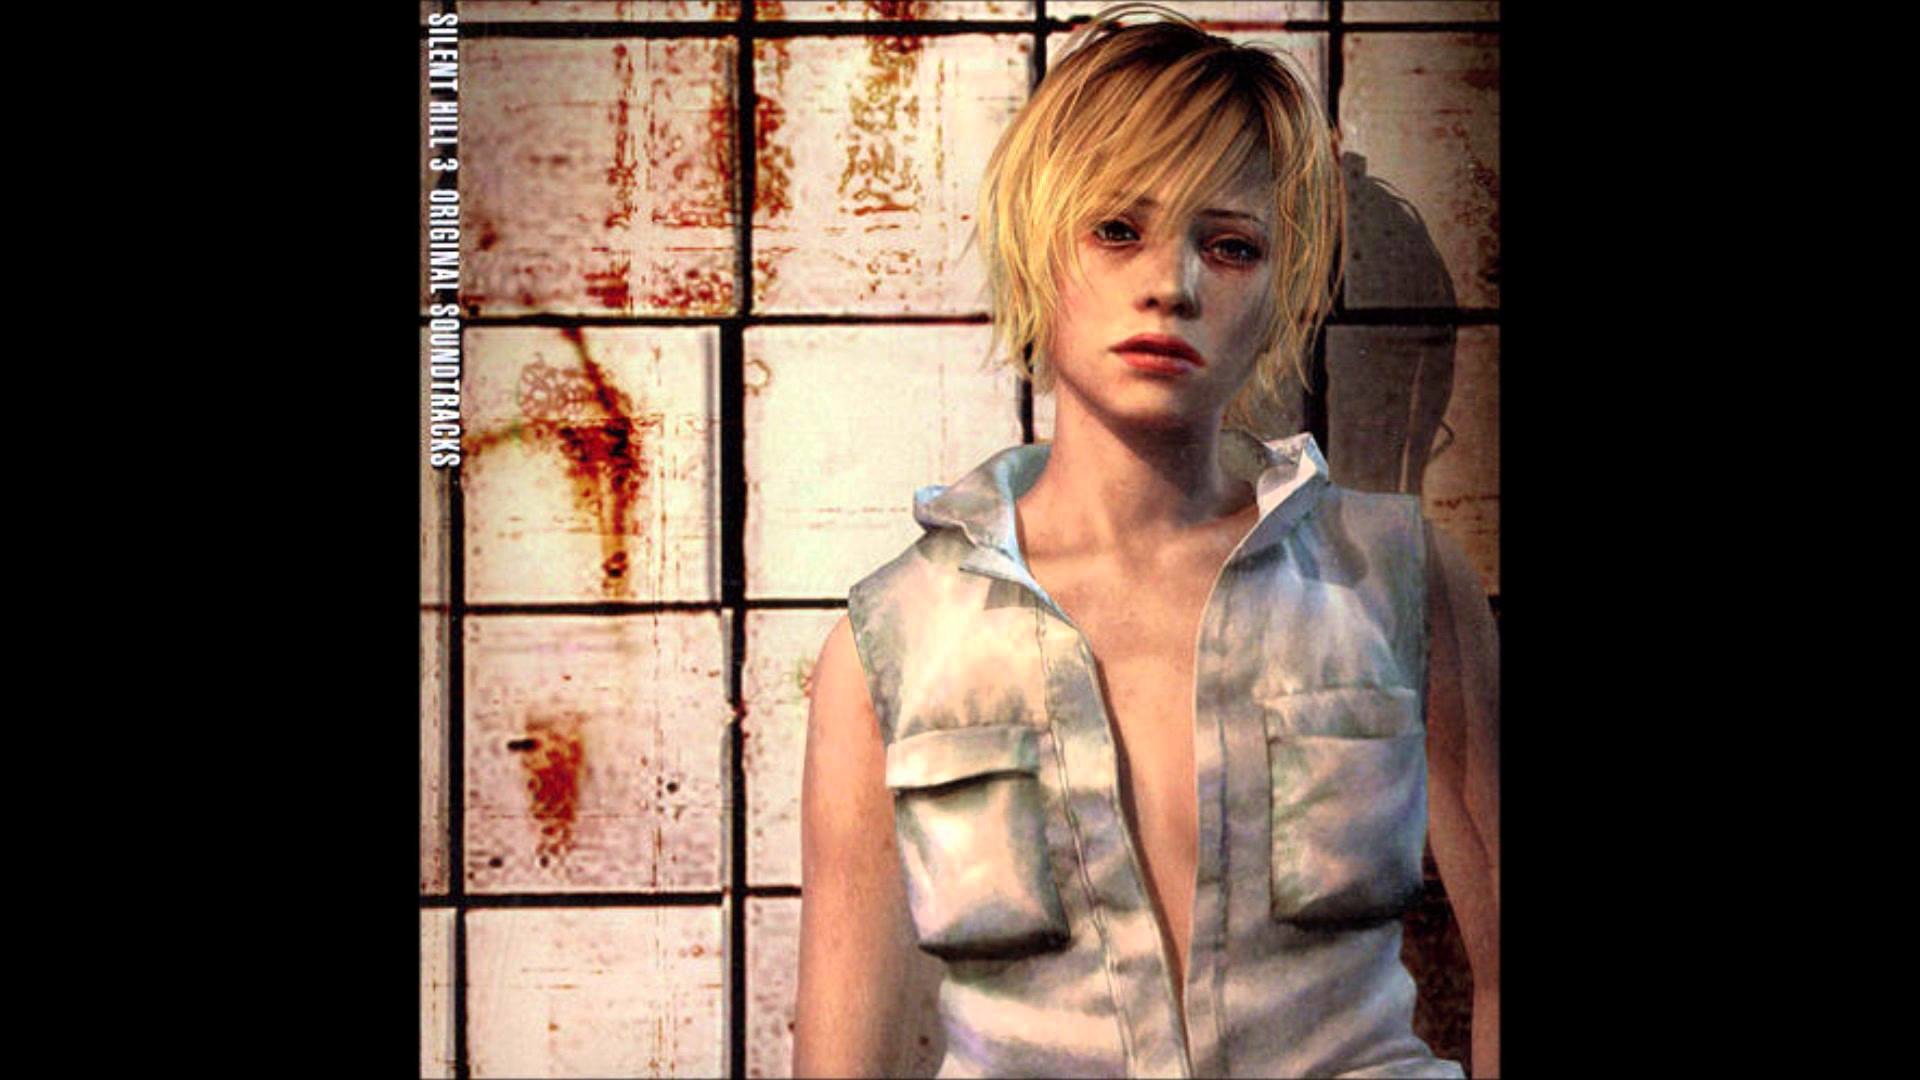 1920x1080 Silent Hill 3 OST: "You're Not Here" by Akira Yamaoka